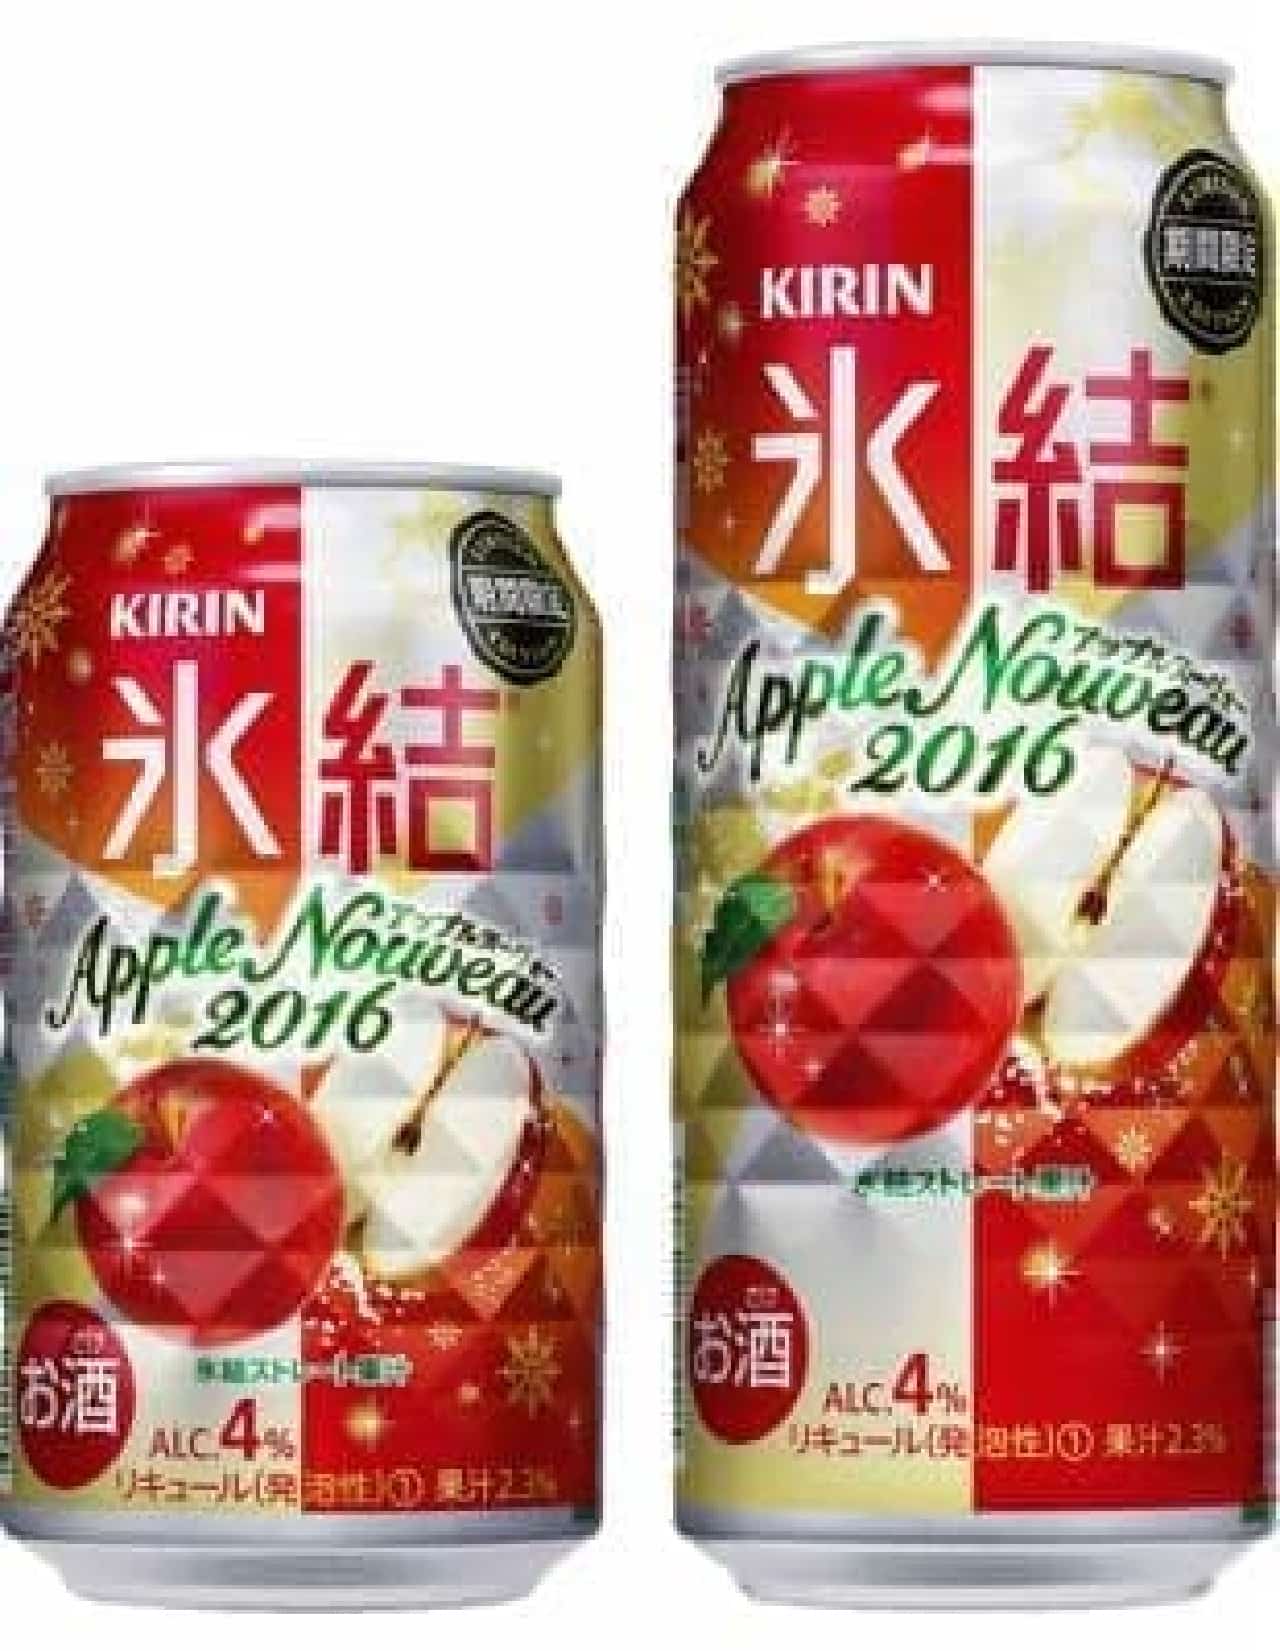 Kirin Freeze Apple Nouveau [Limited time offer]